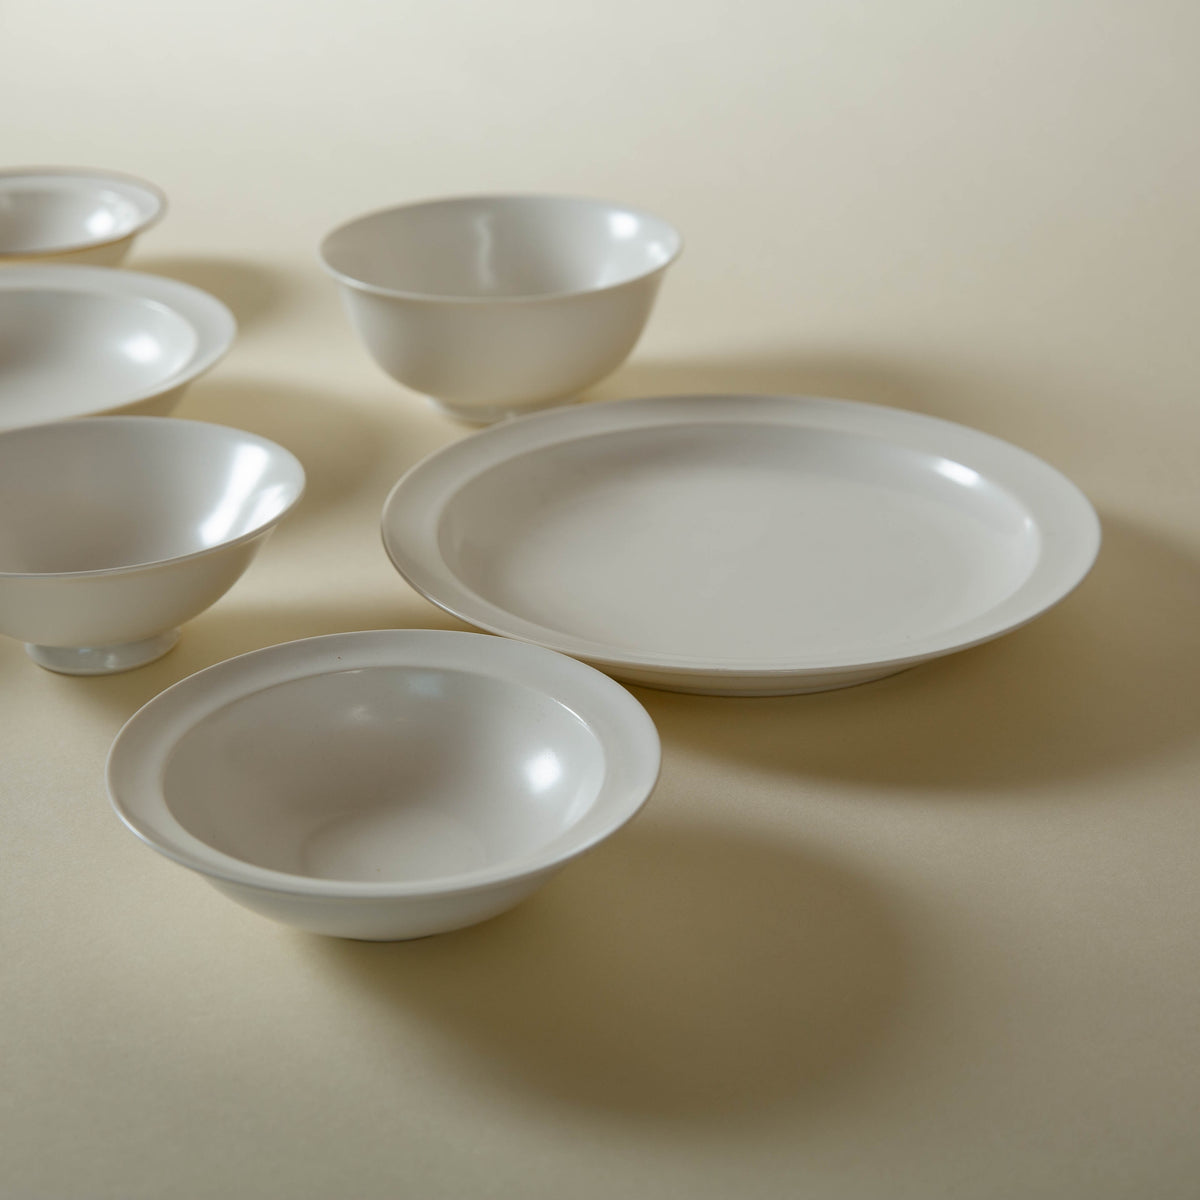 Porcelain Plates and Bowls